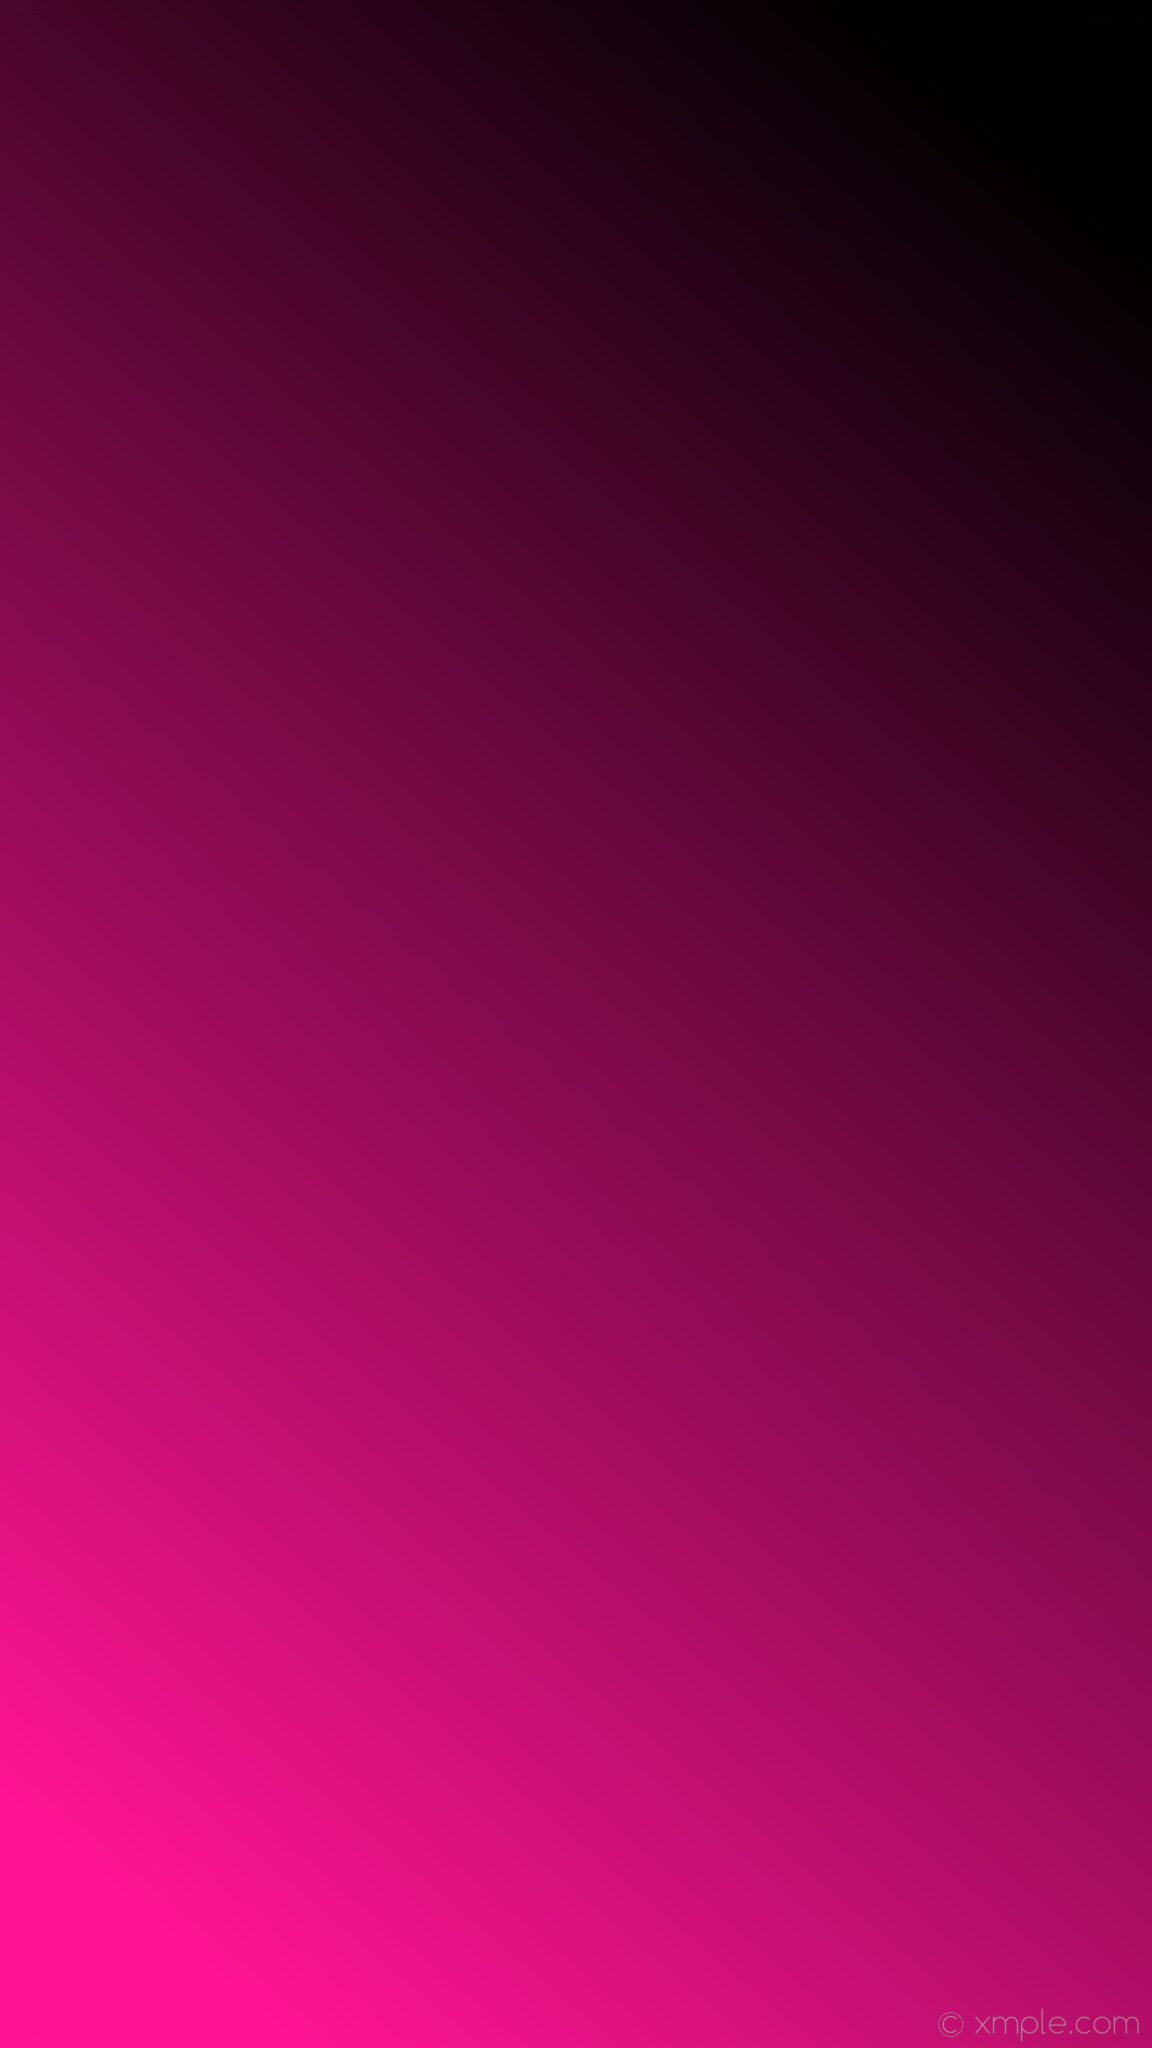 1152x2048 wallpaper gradient pink black linear deep pink #000000 #ff1493 75Â°